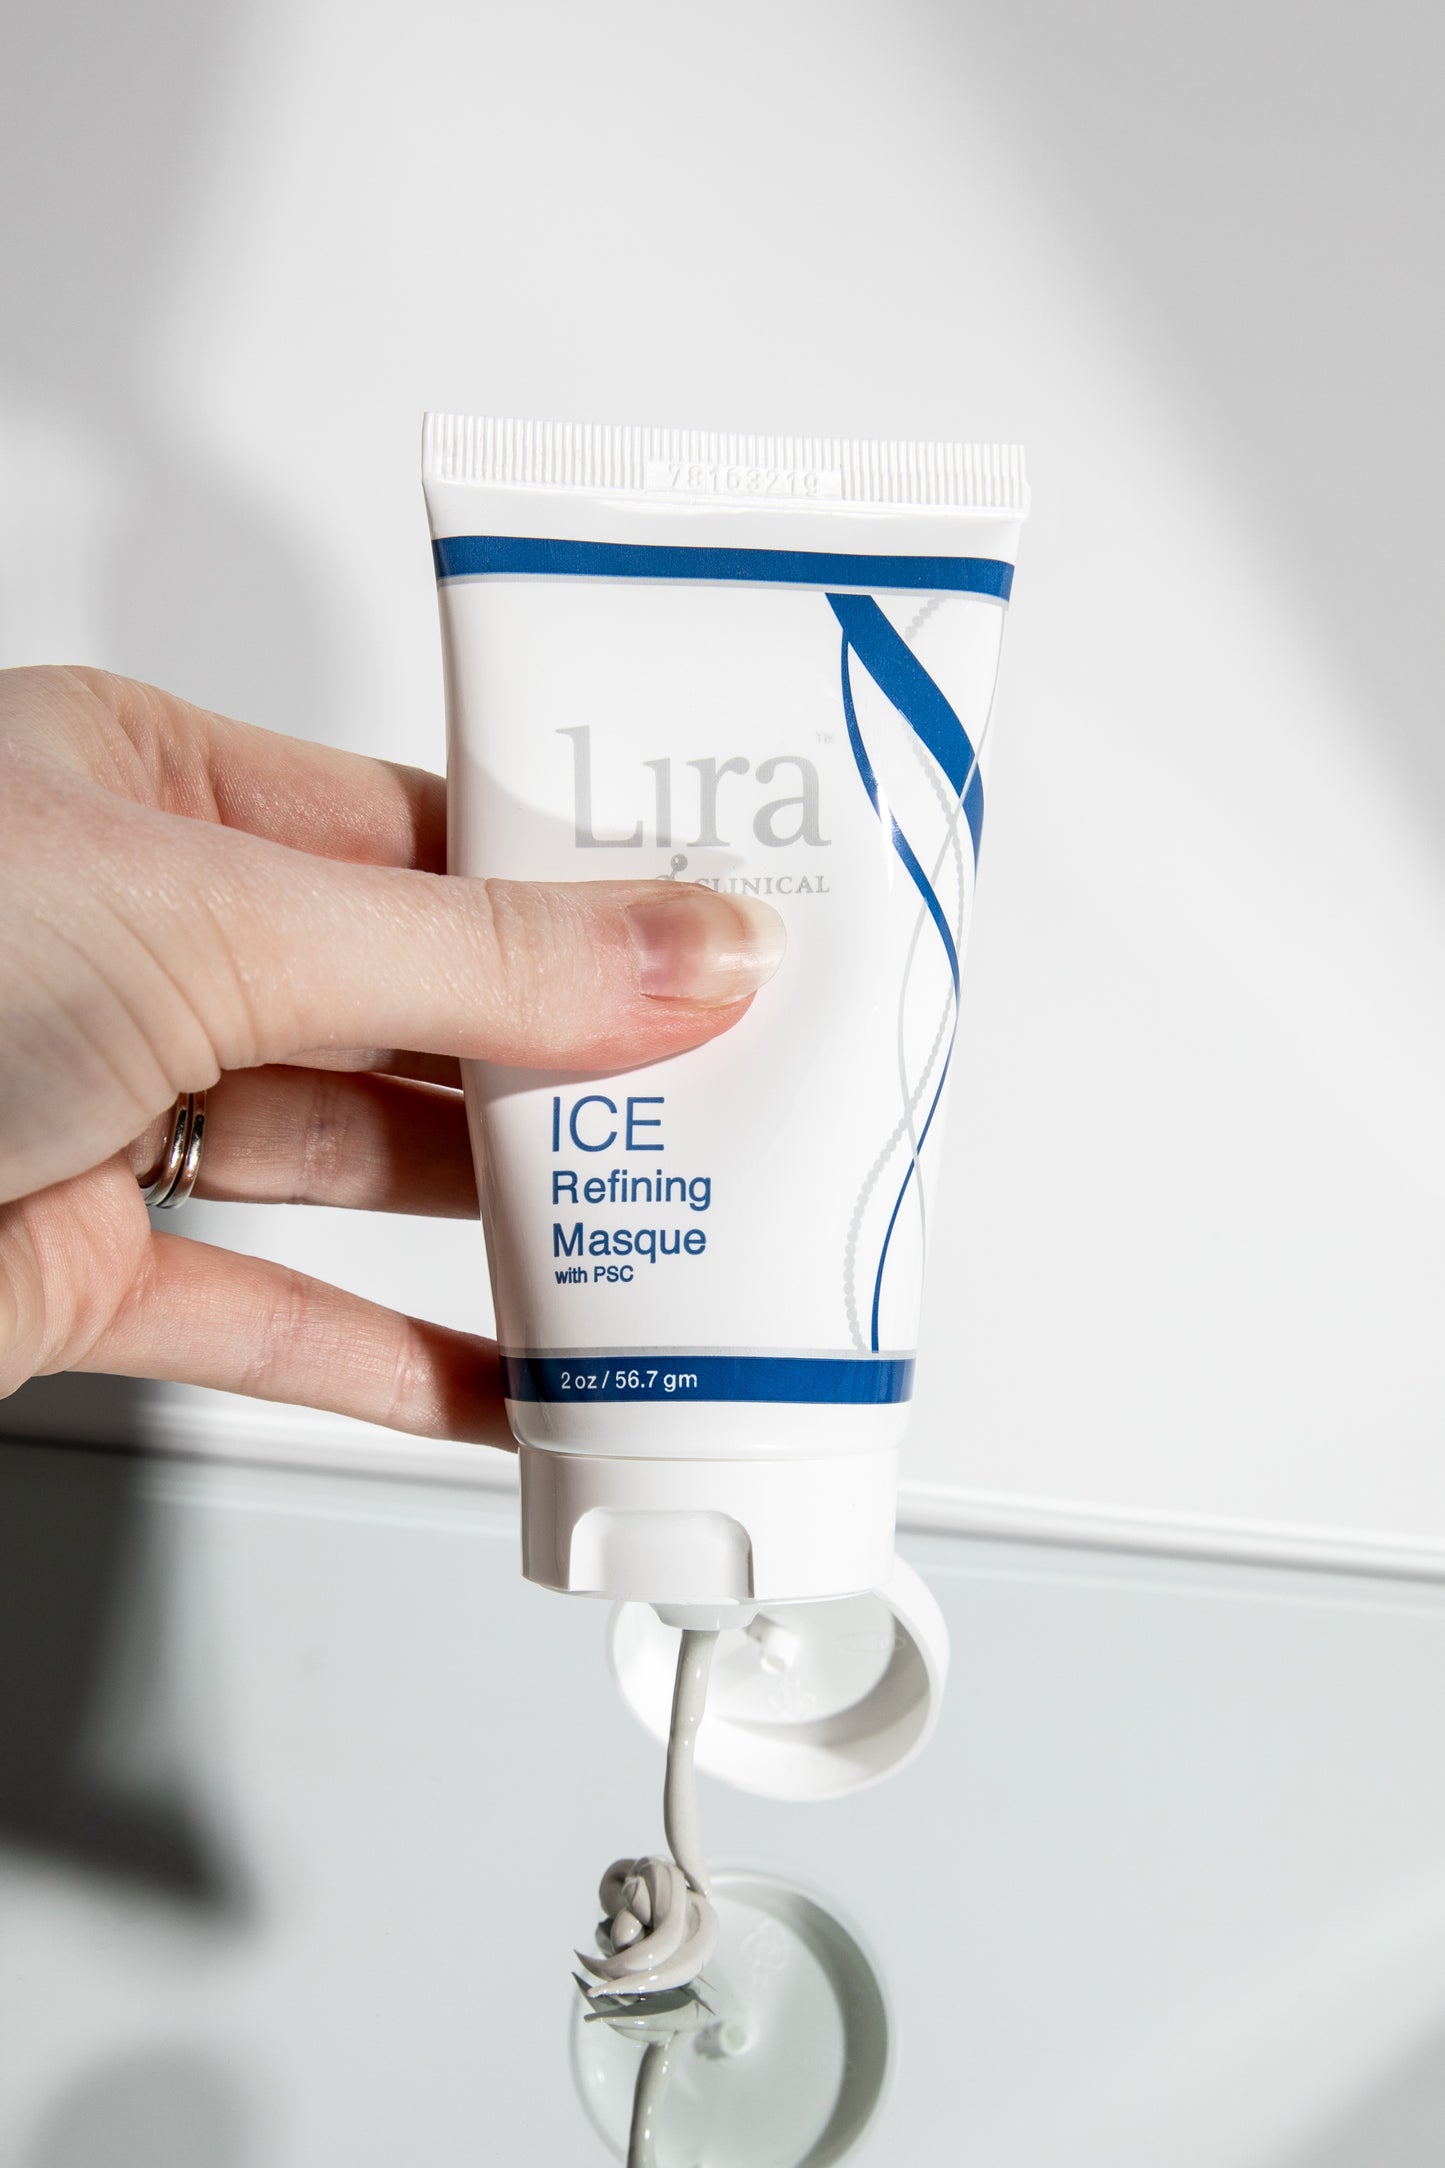 Lira ICE Refining Masque with PSC